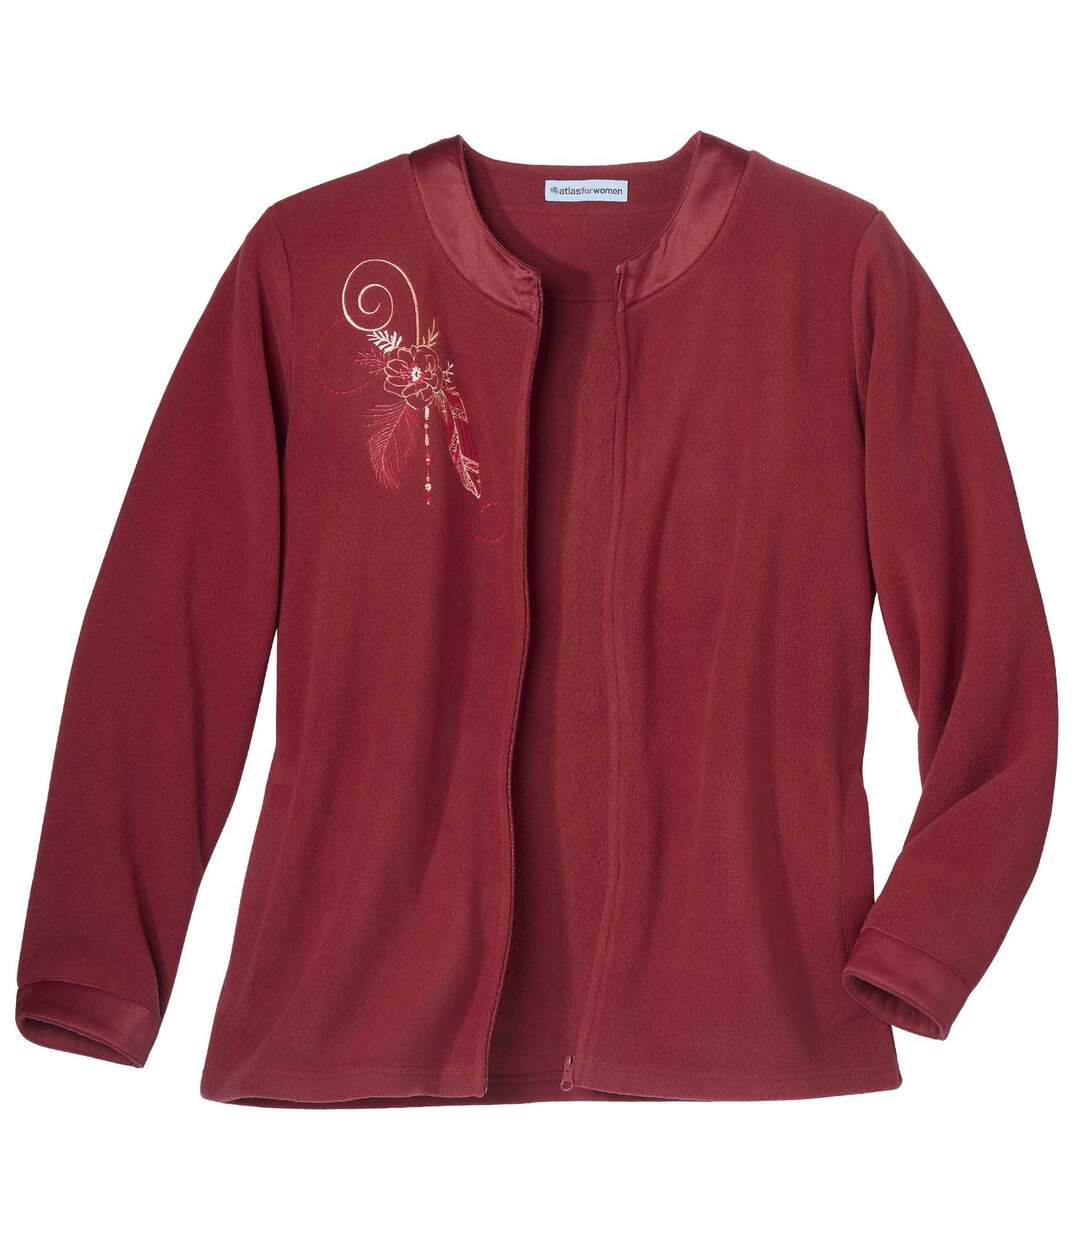 Women's Embroidered Fleece Jacket - Burgundy Atlas For Men